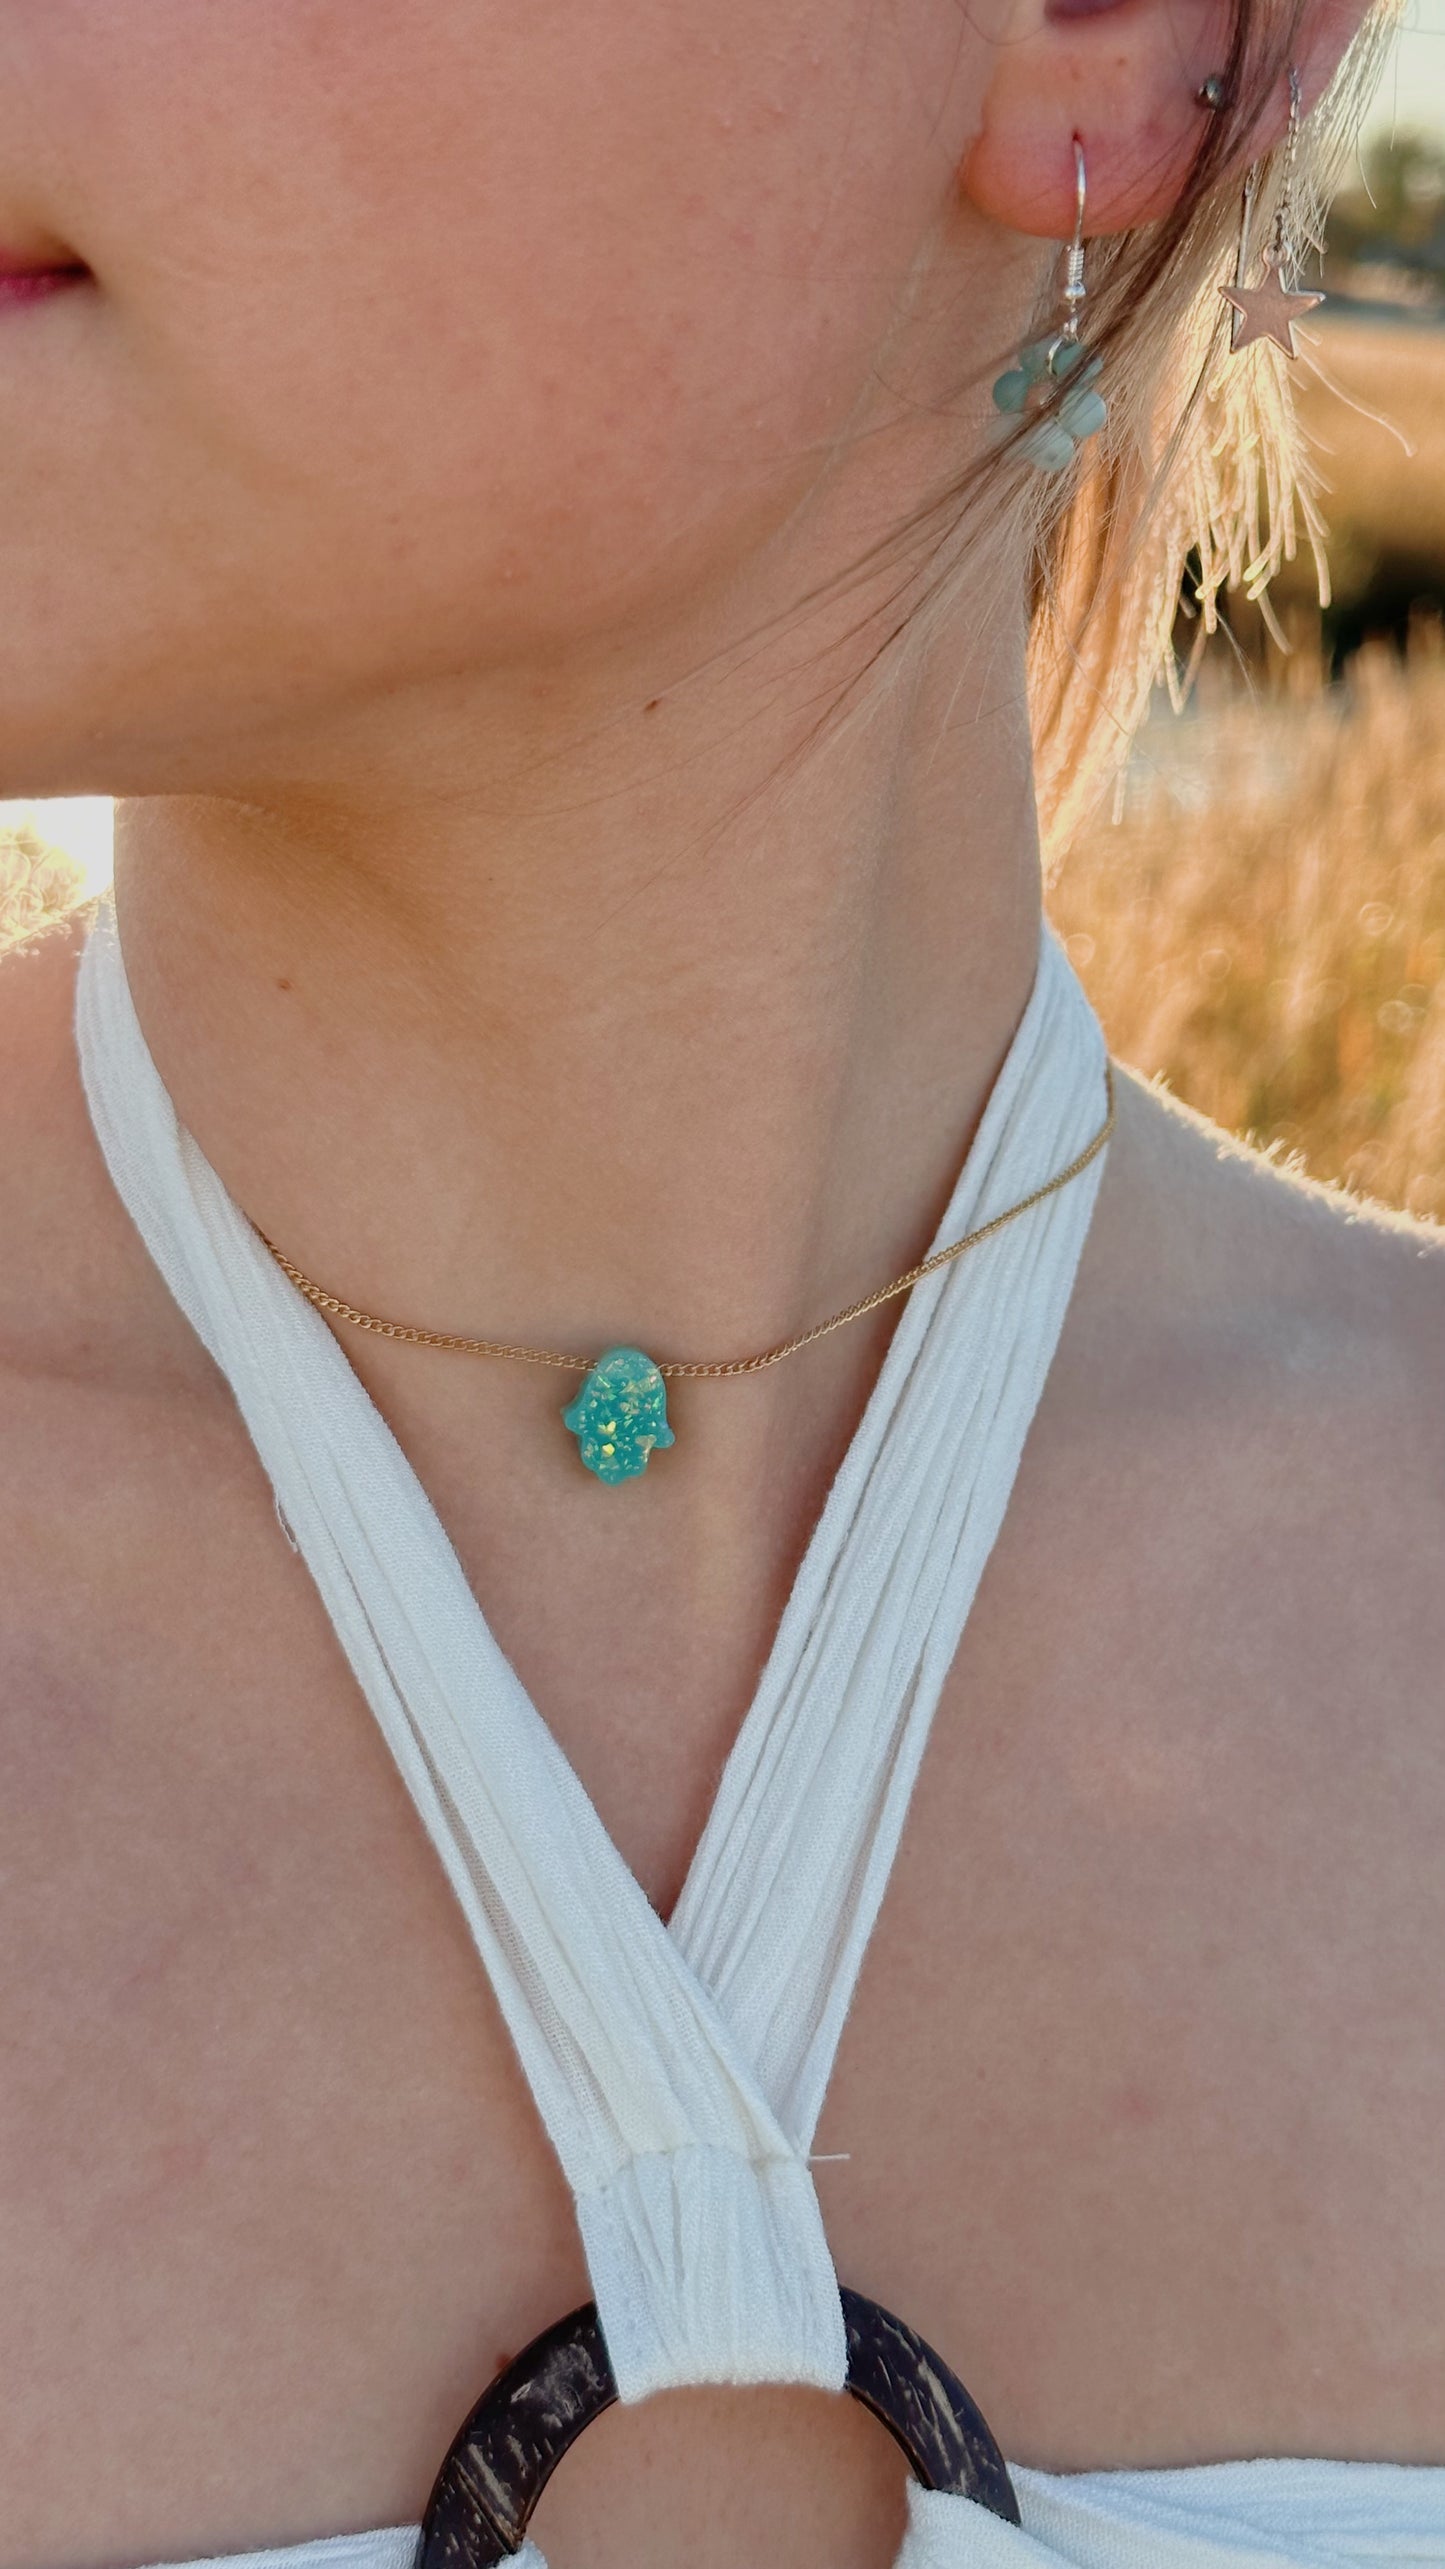 Hamsa opal charm necklace